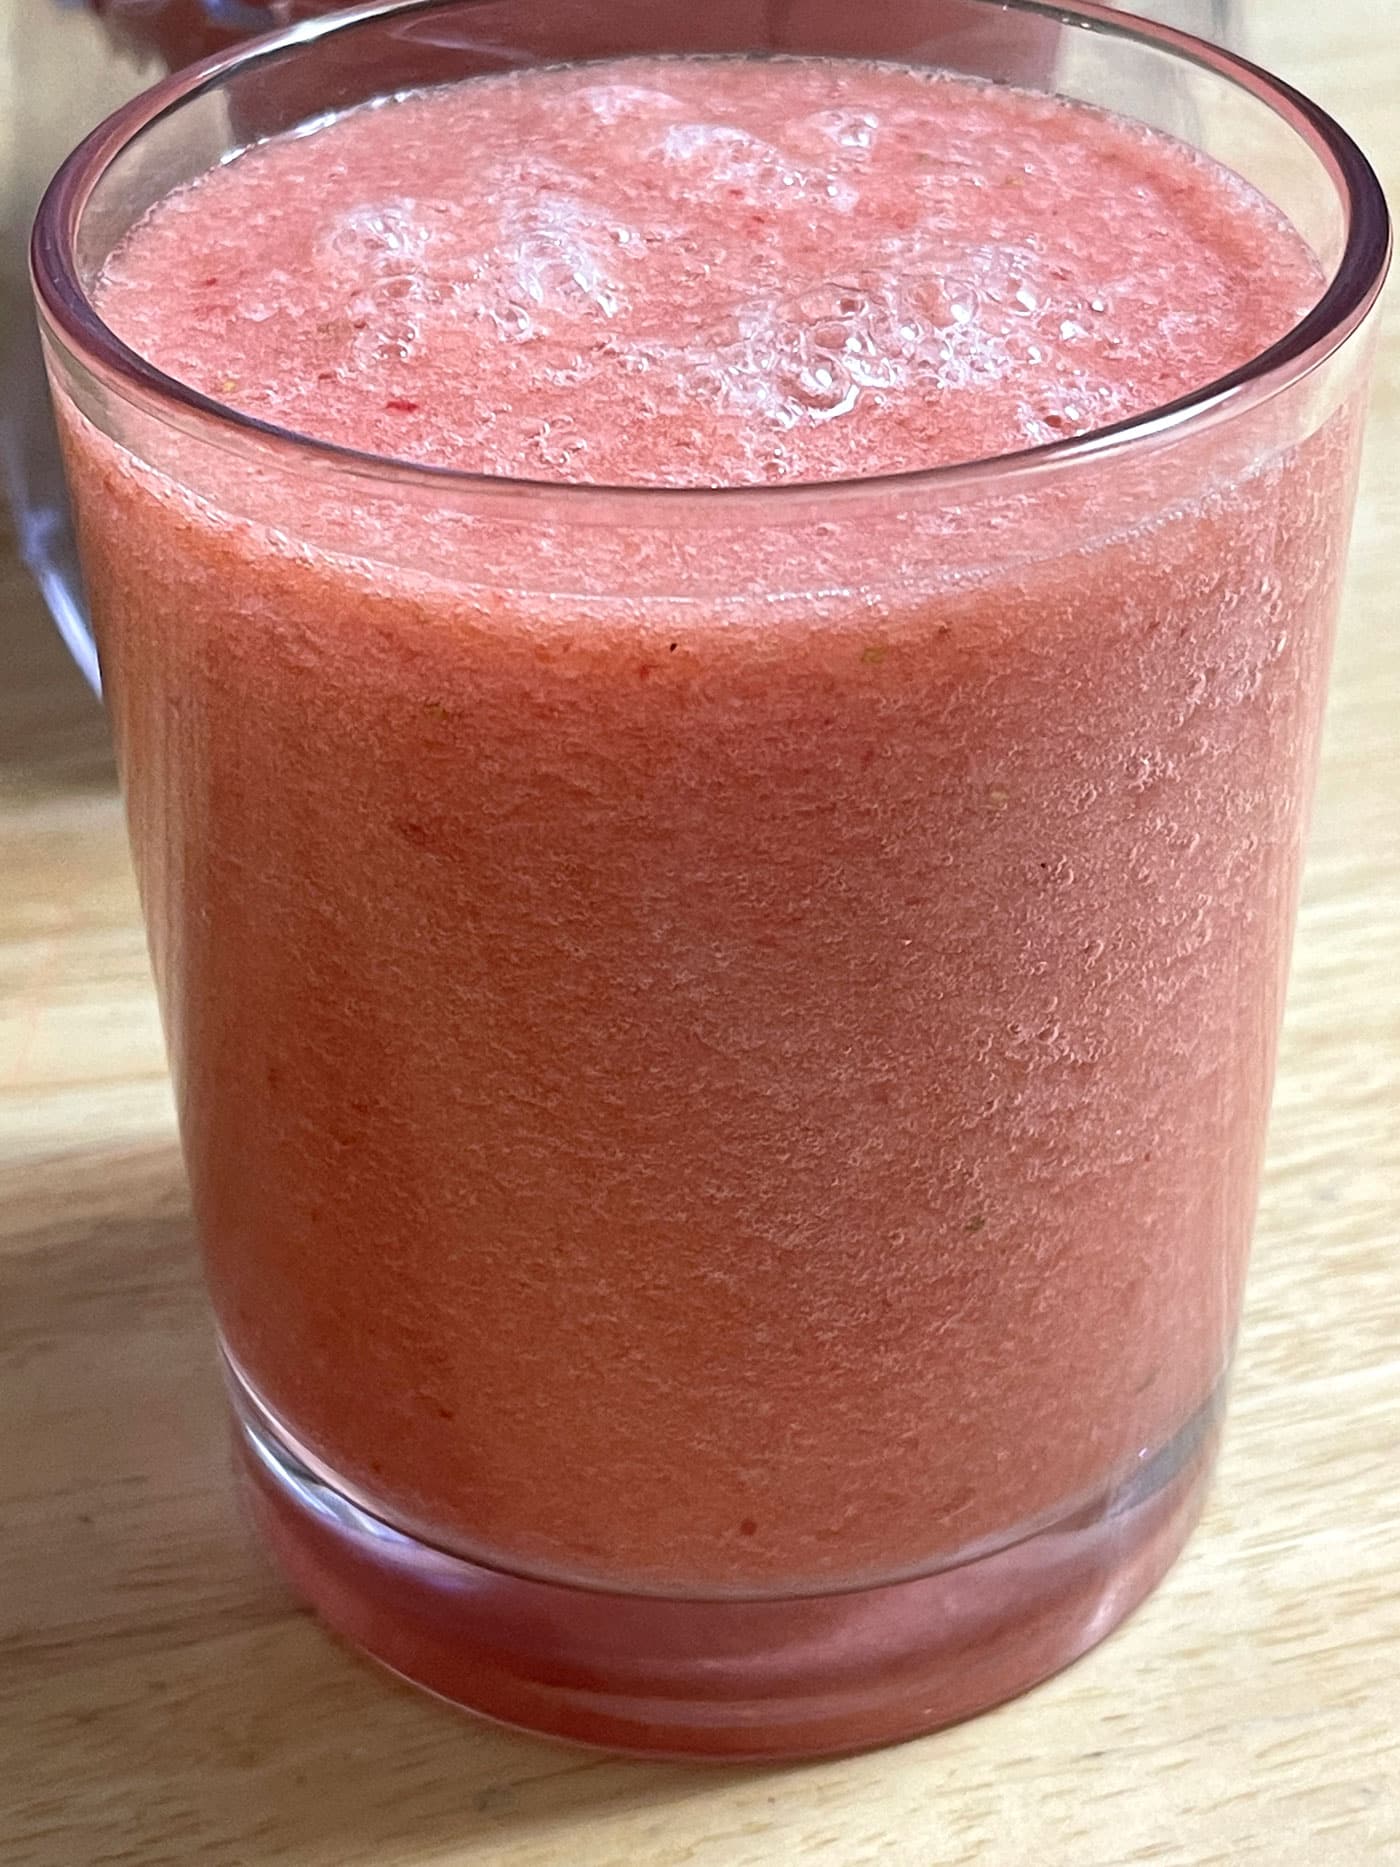 watermelon strawberry smoothie without yogurt or milk